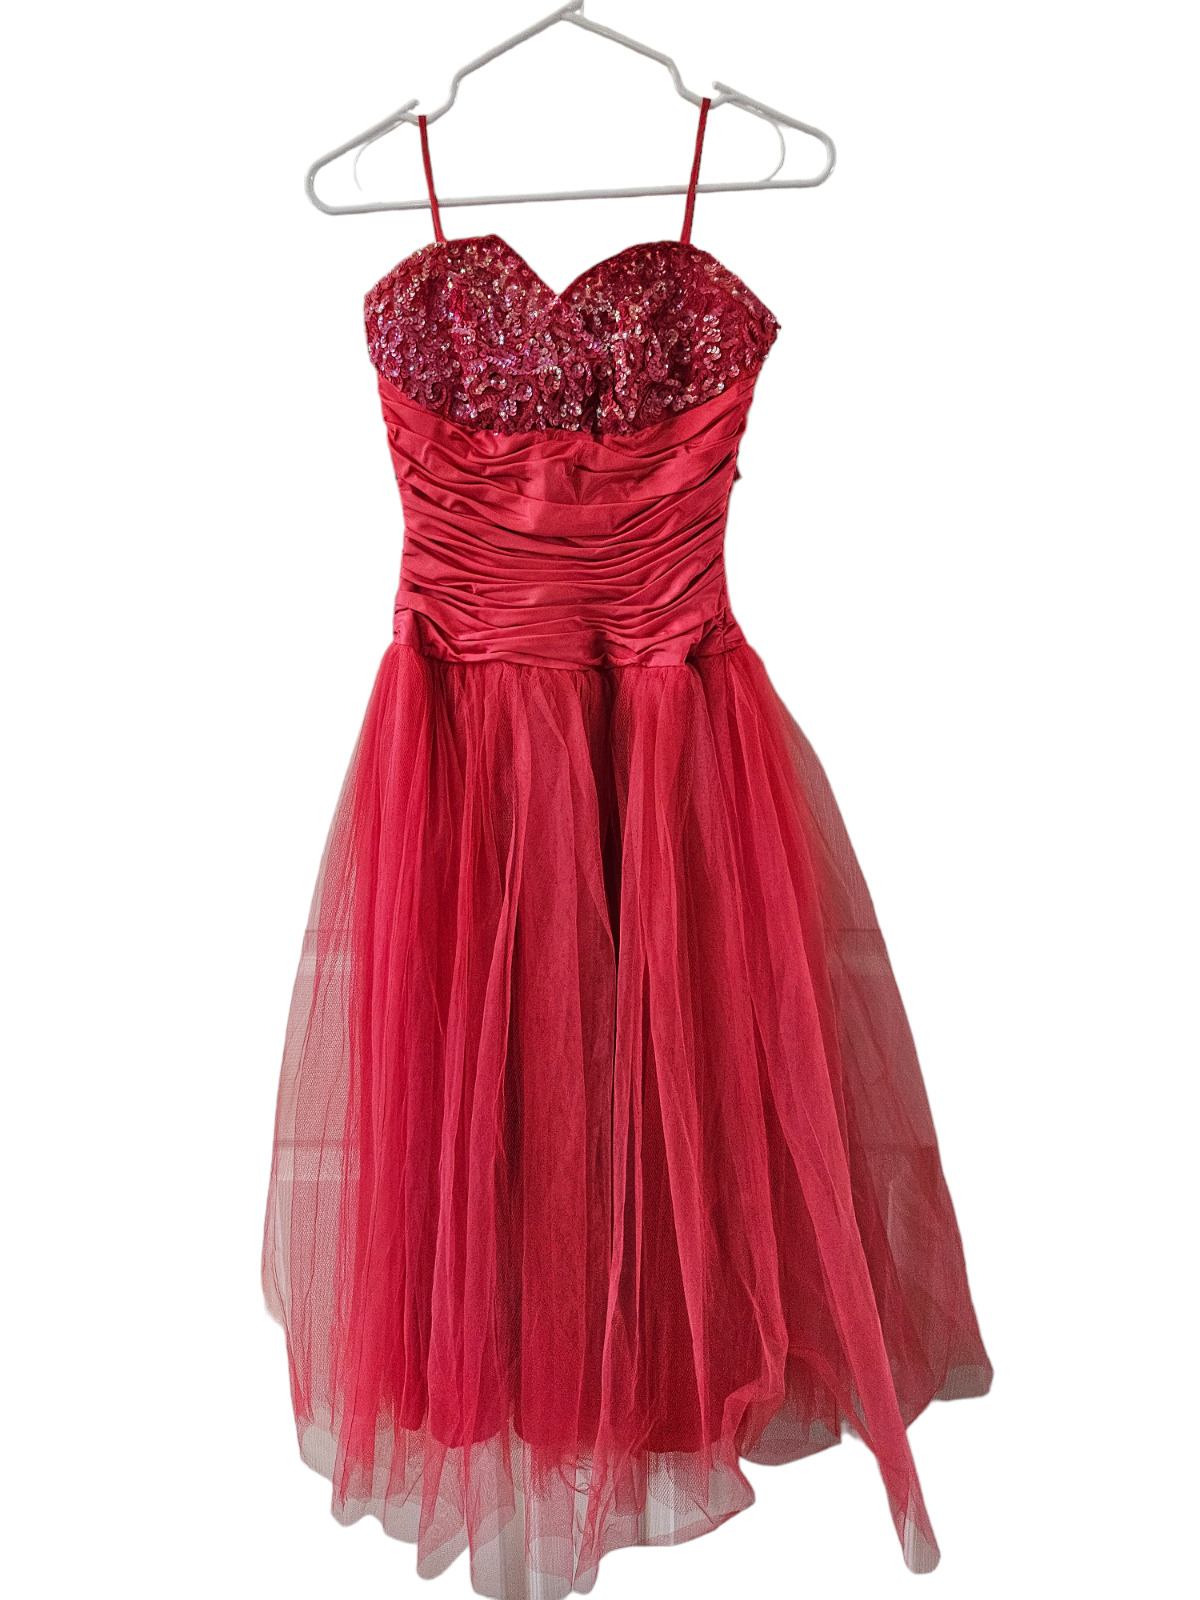 Emma Domb Hot Pink Formal Dress 1950s Netting Evening Ball STUNNING S/M